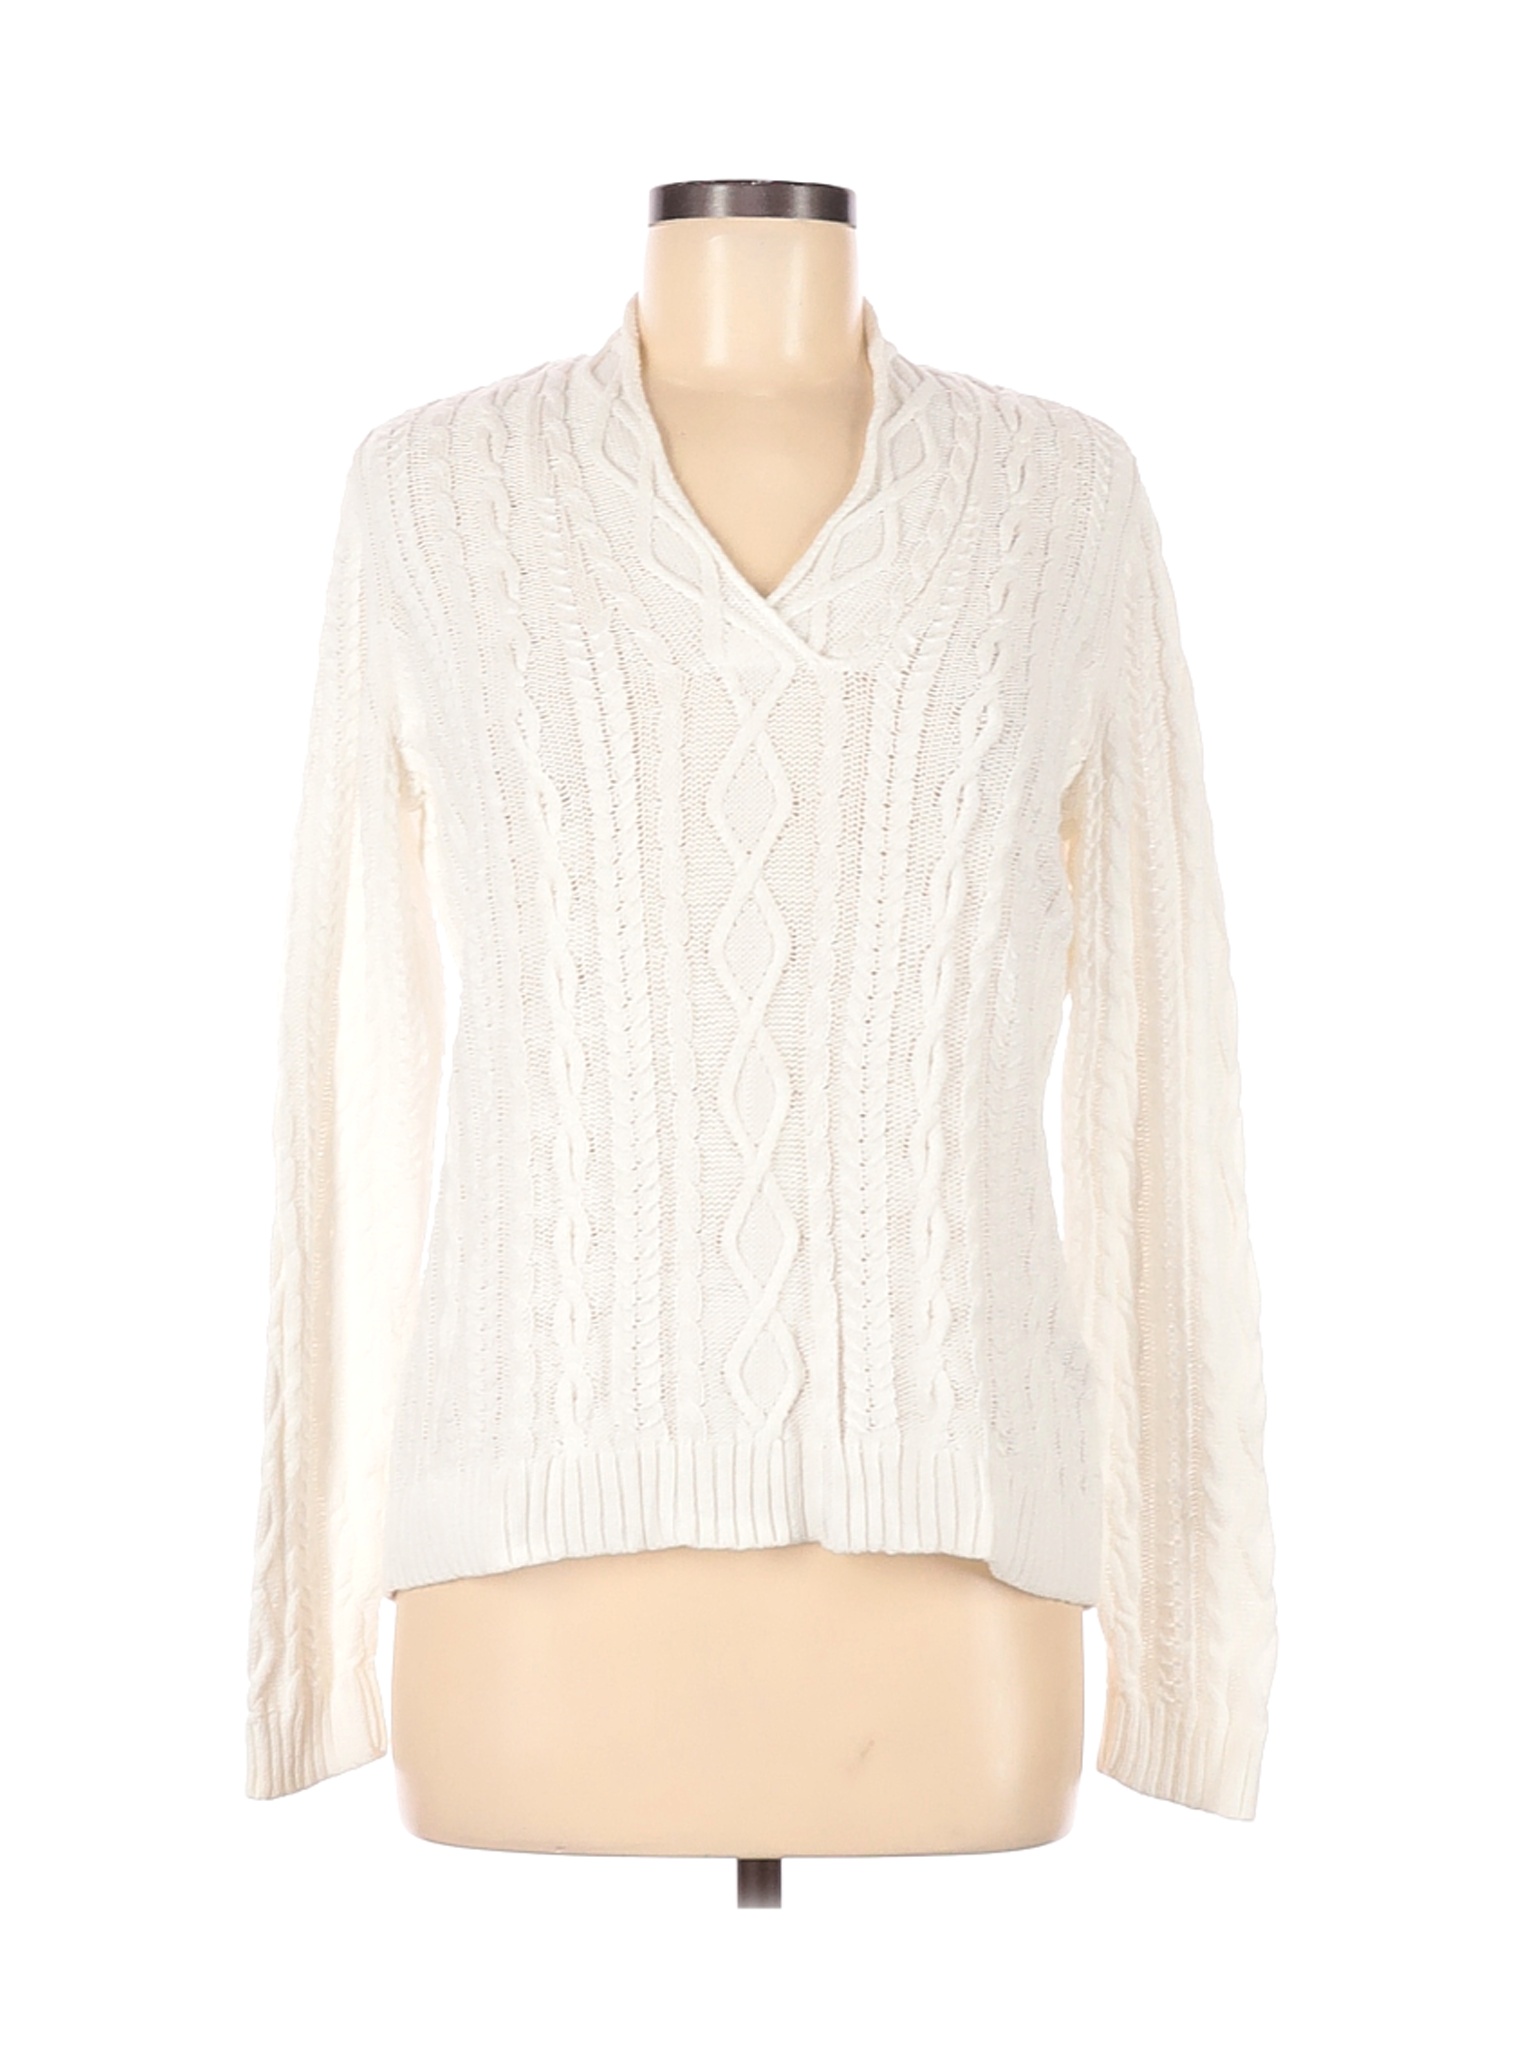 Chaps Women White Pullover Sweater M | eBay